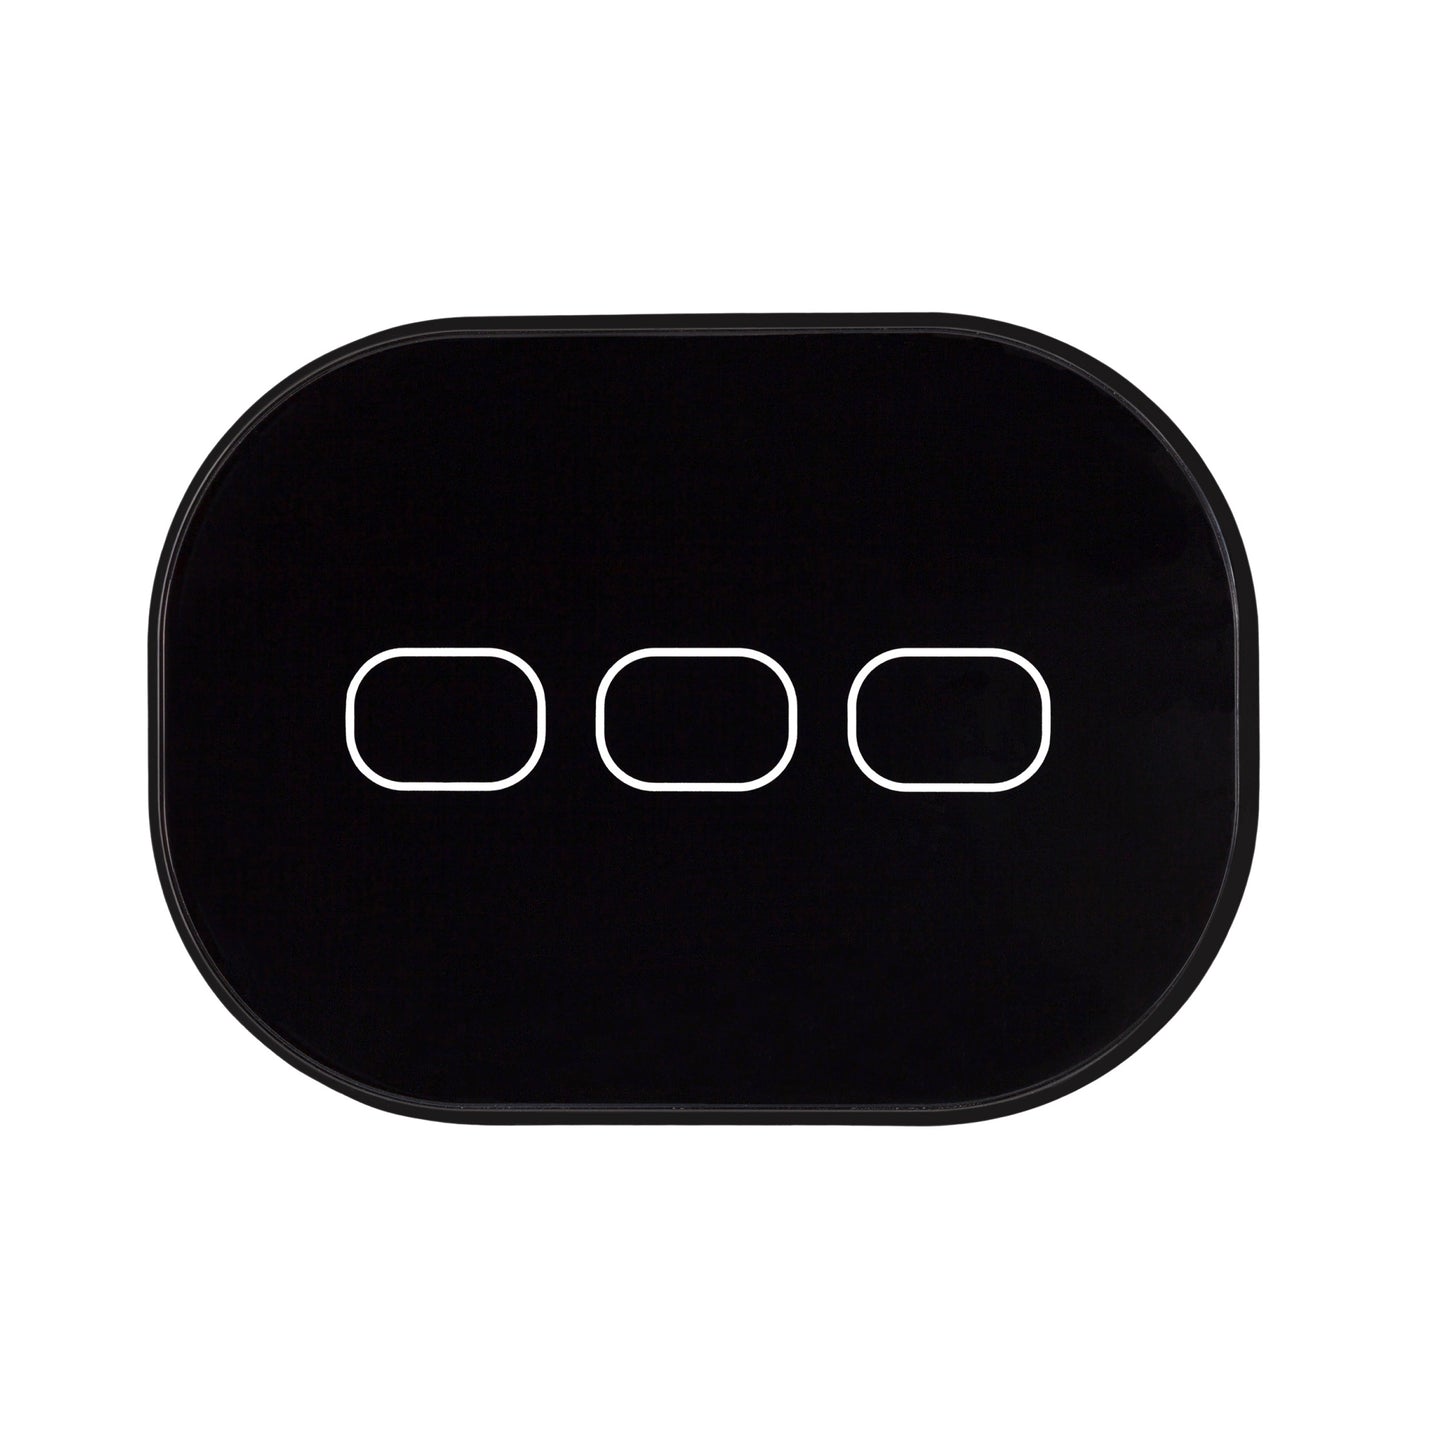 WiOO Master Switch - Apple HomeKit